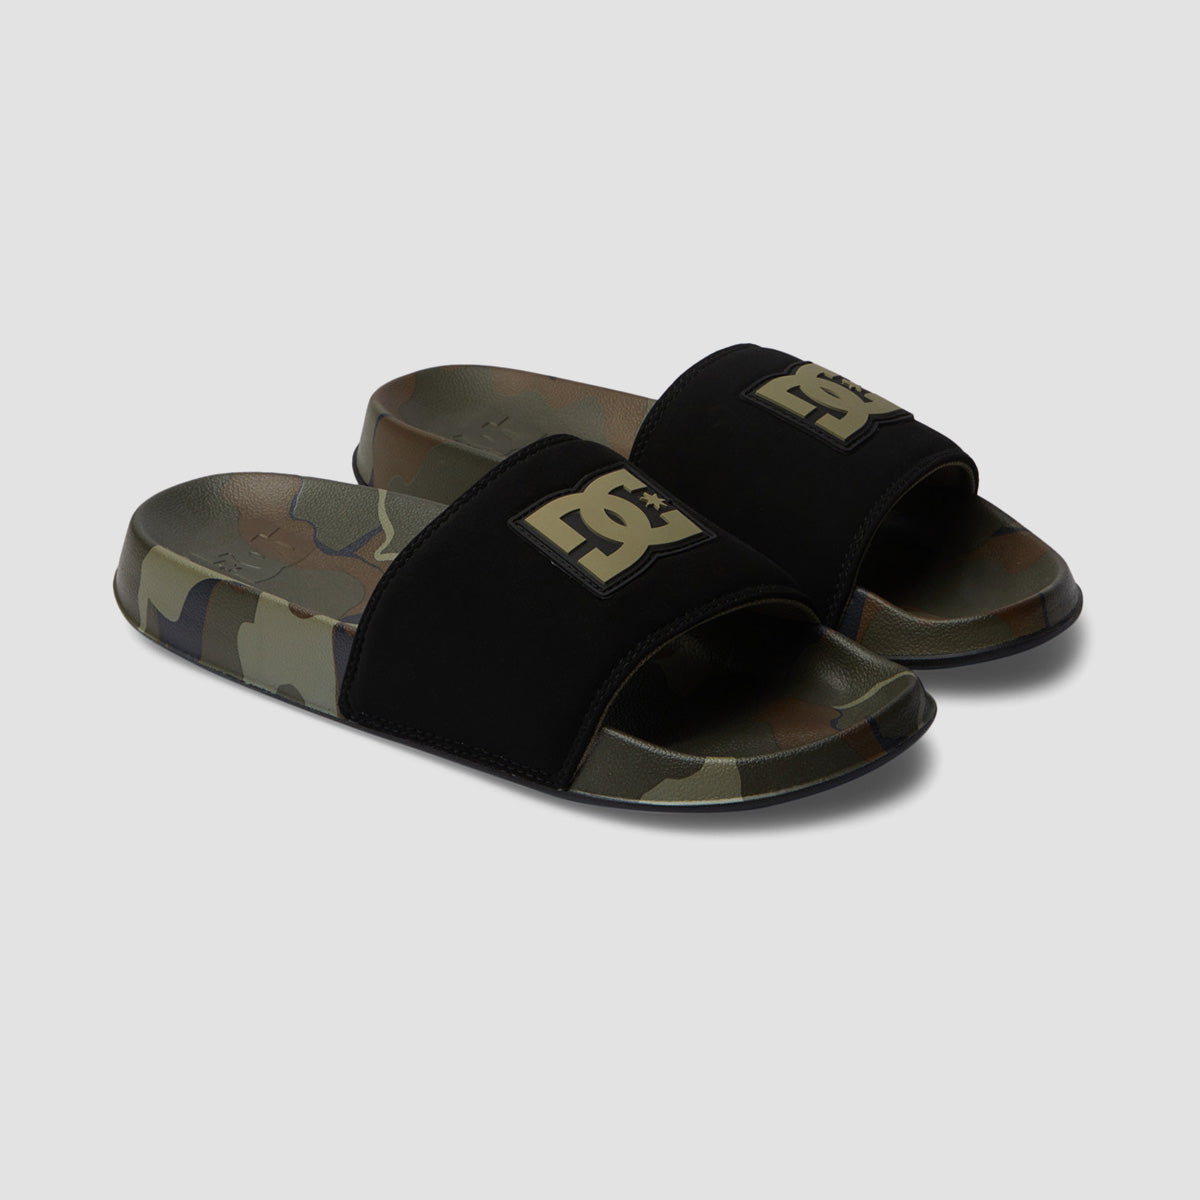 DC Slide SE Sandals - White/Black/Camo